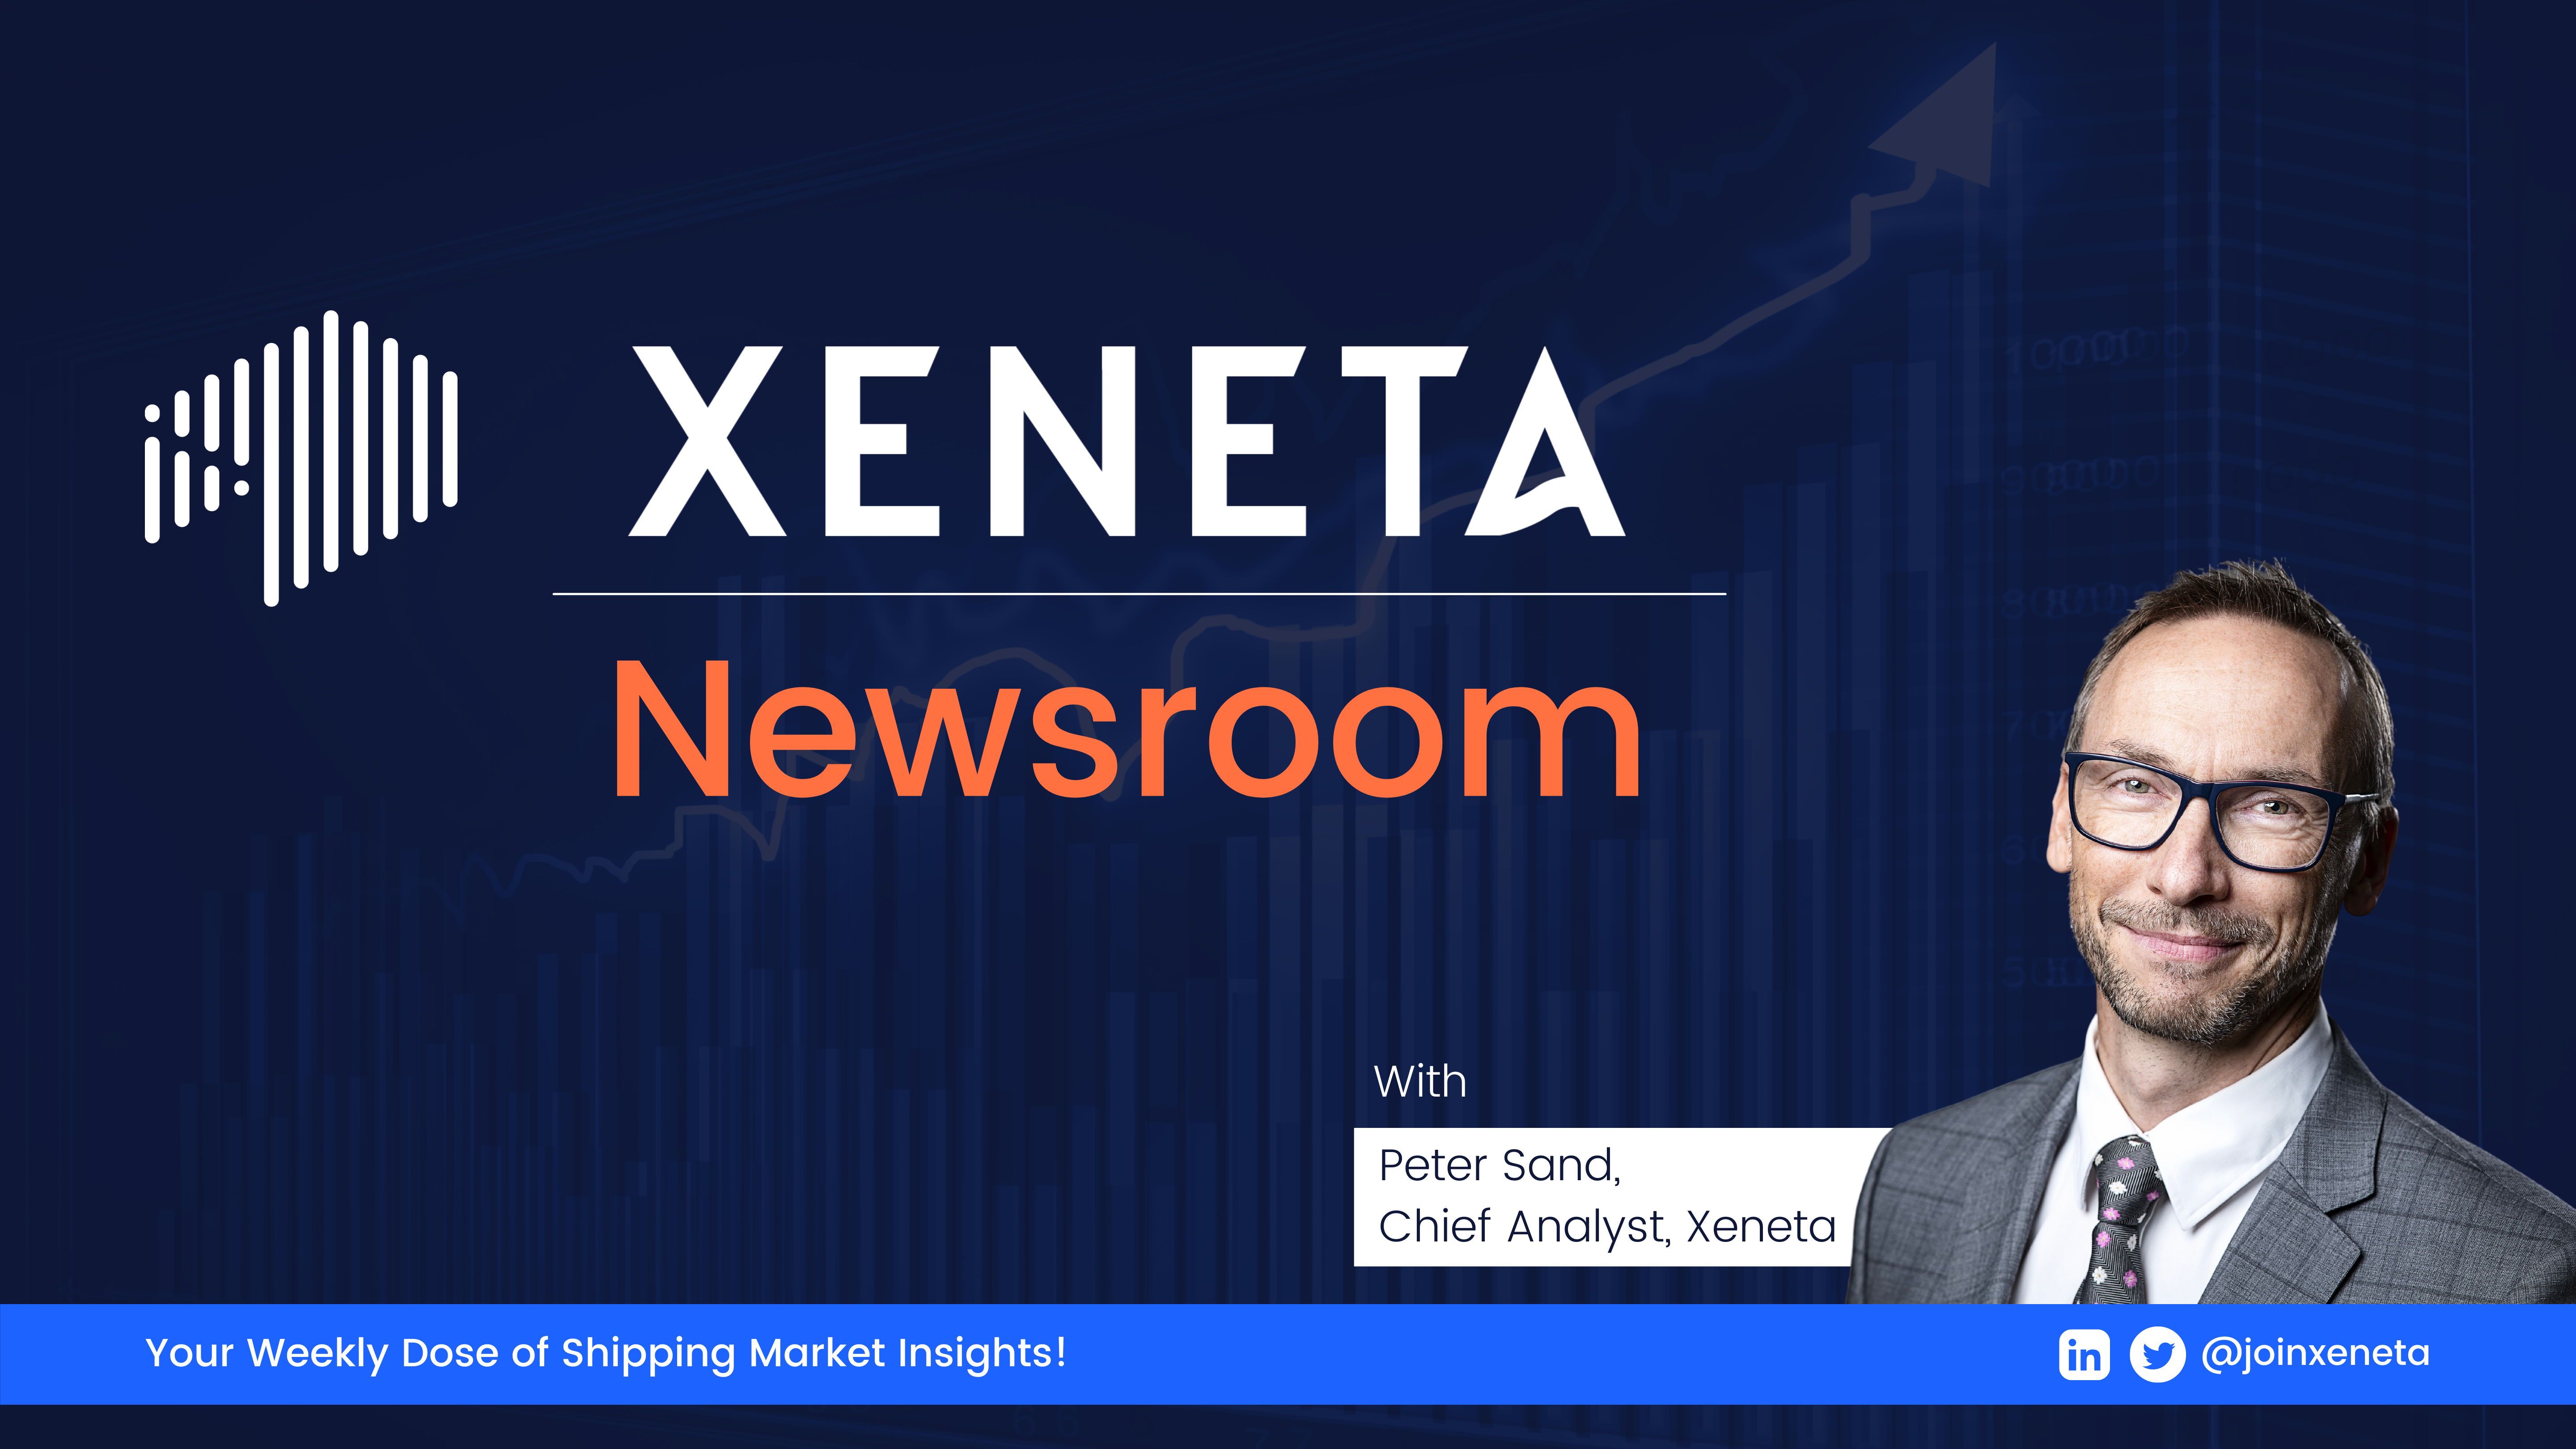 Xeneta Newsroom - Jan 13, 2022